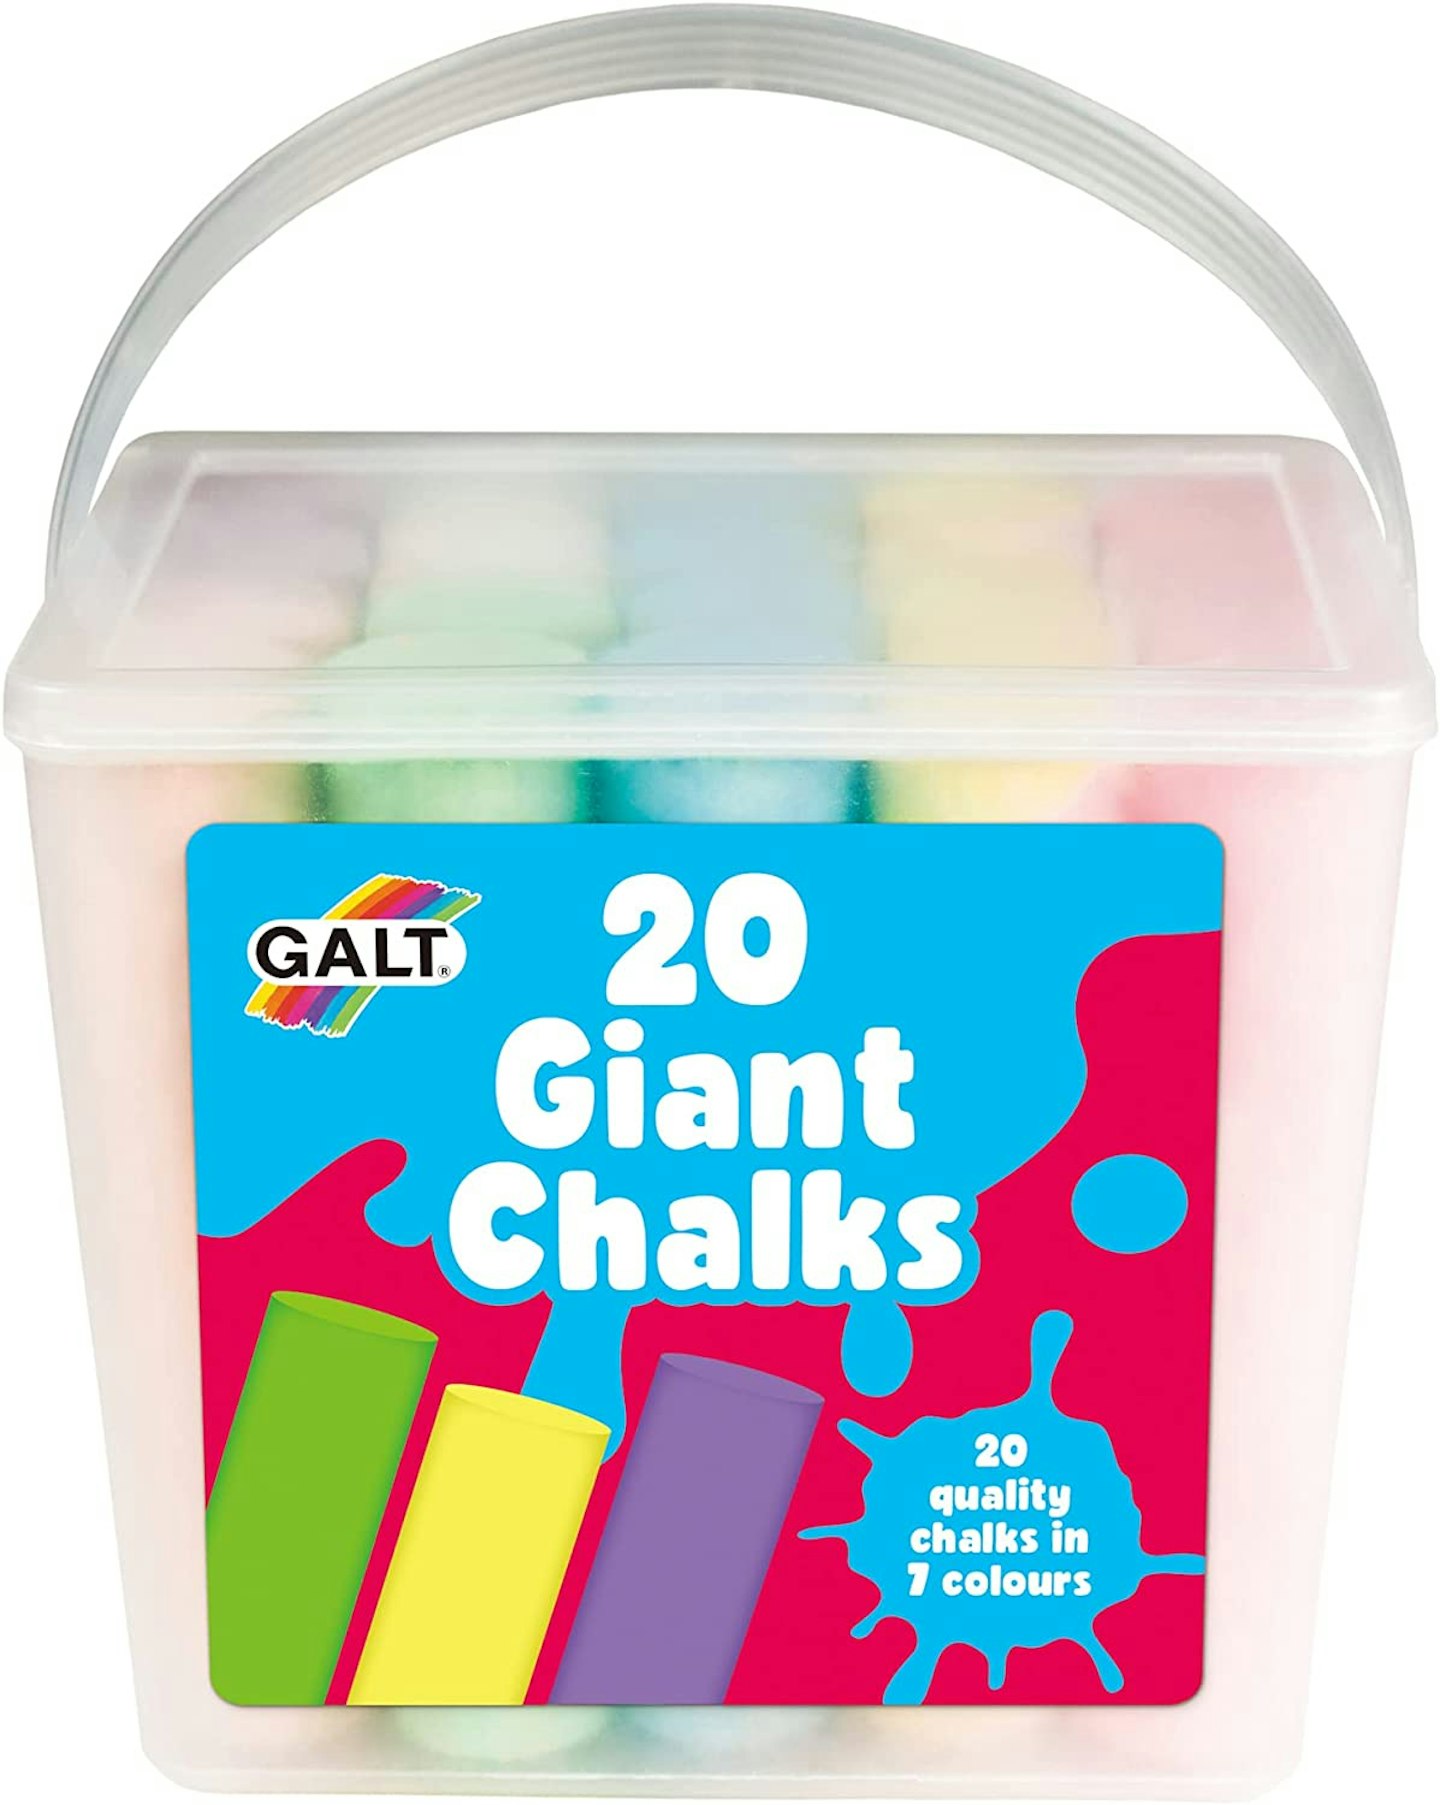 Giant Chalks